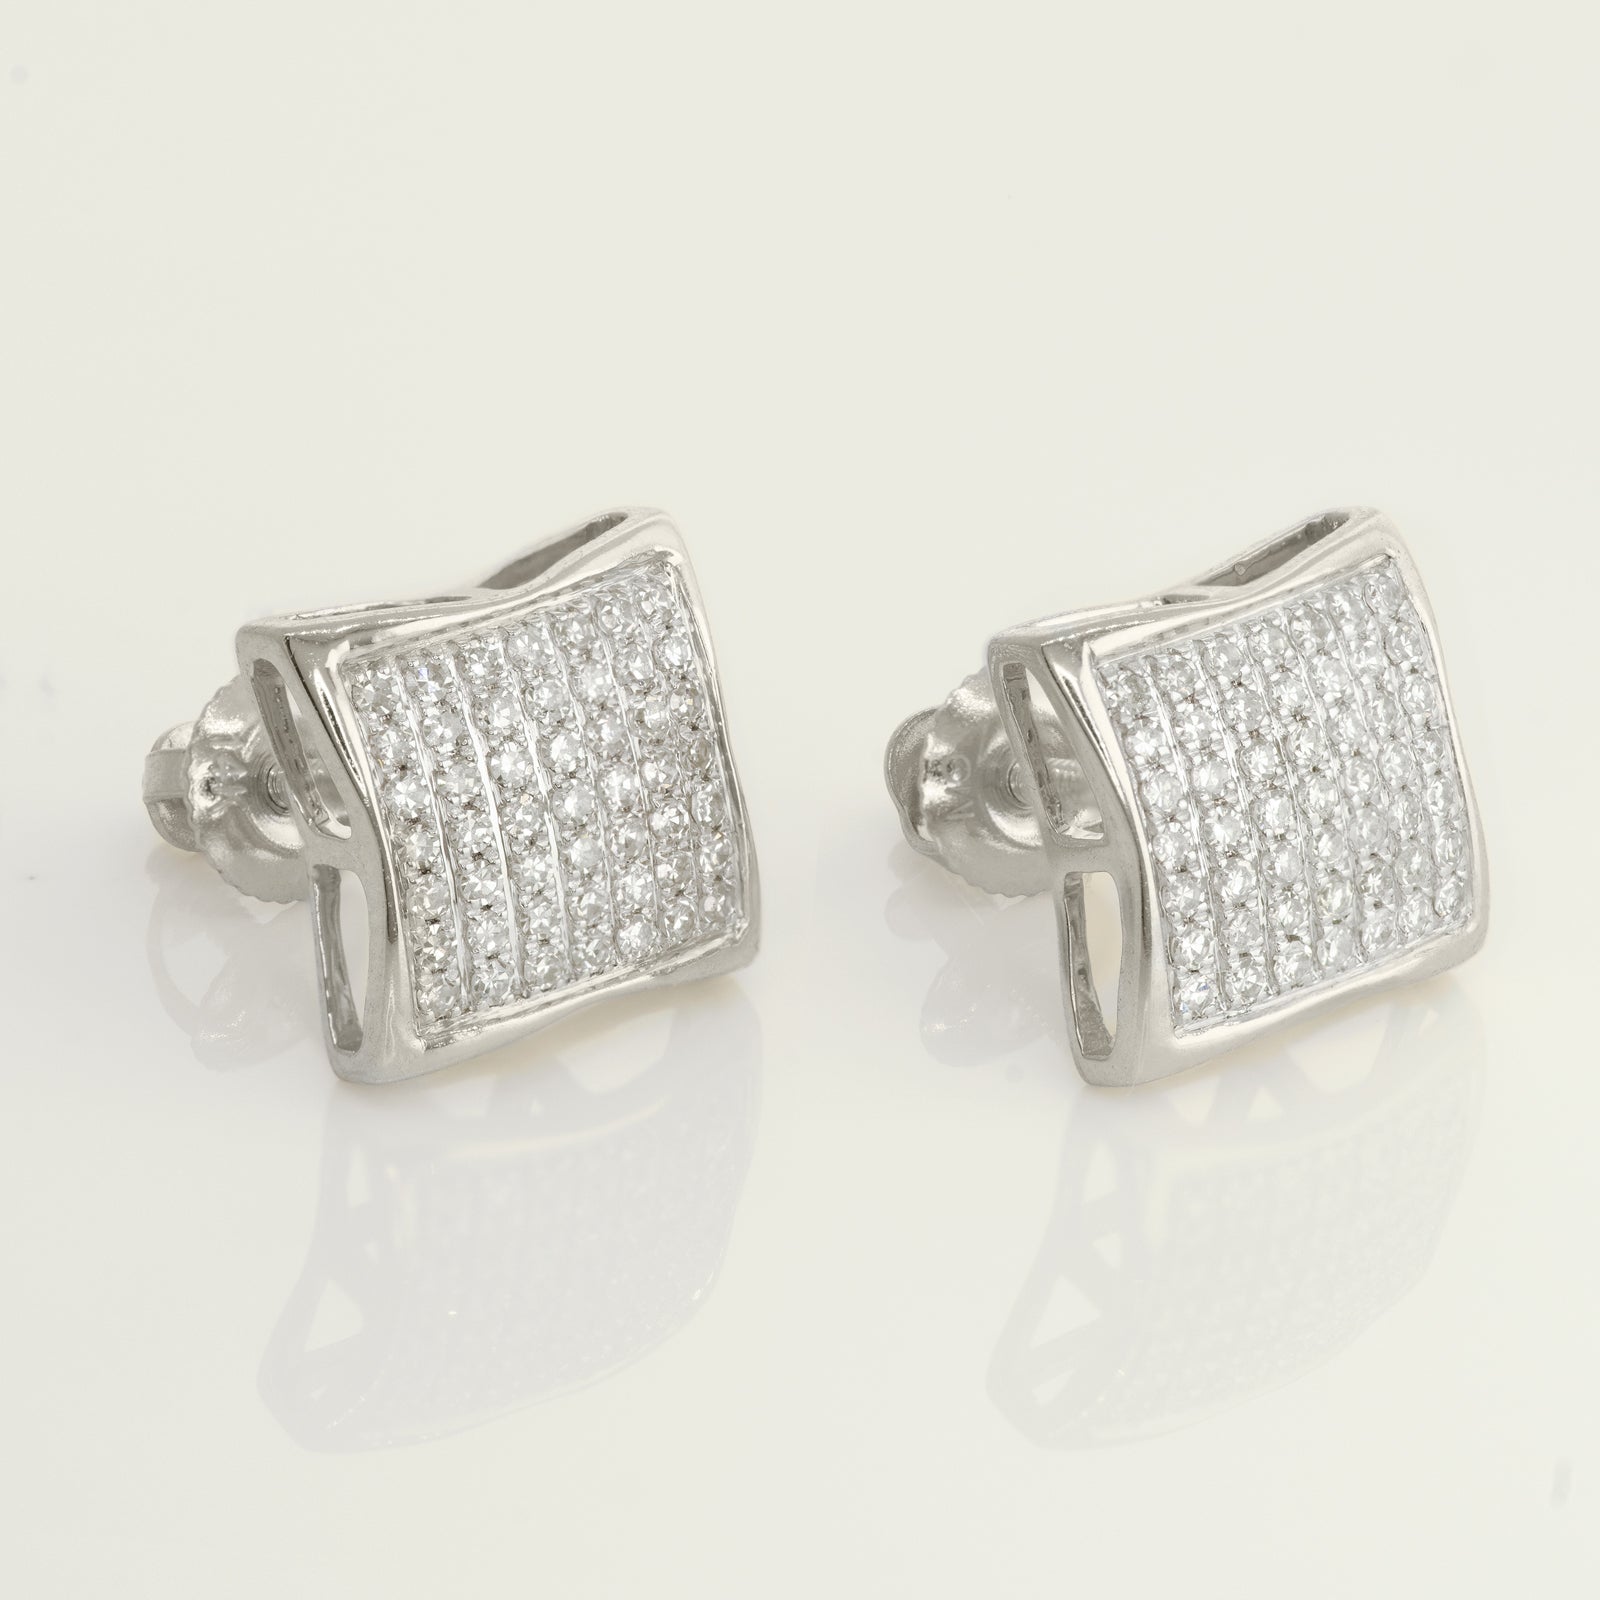 Get Square Diamond Stud Earrings